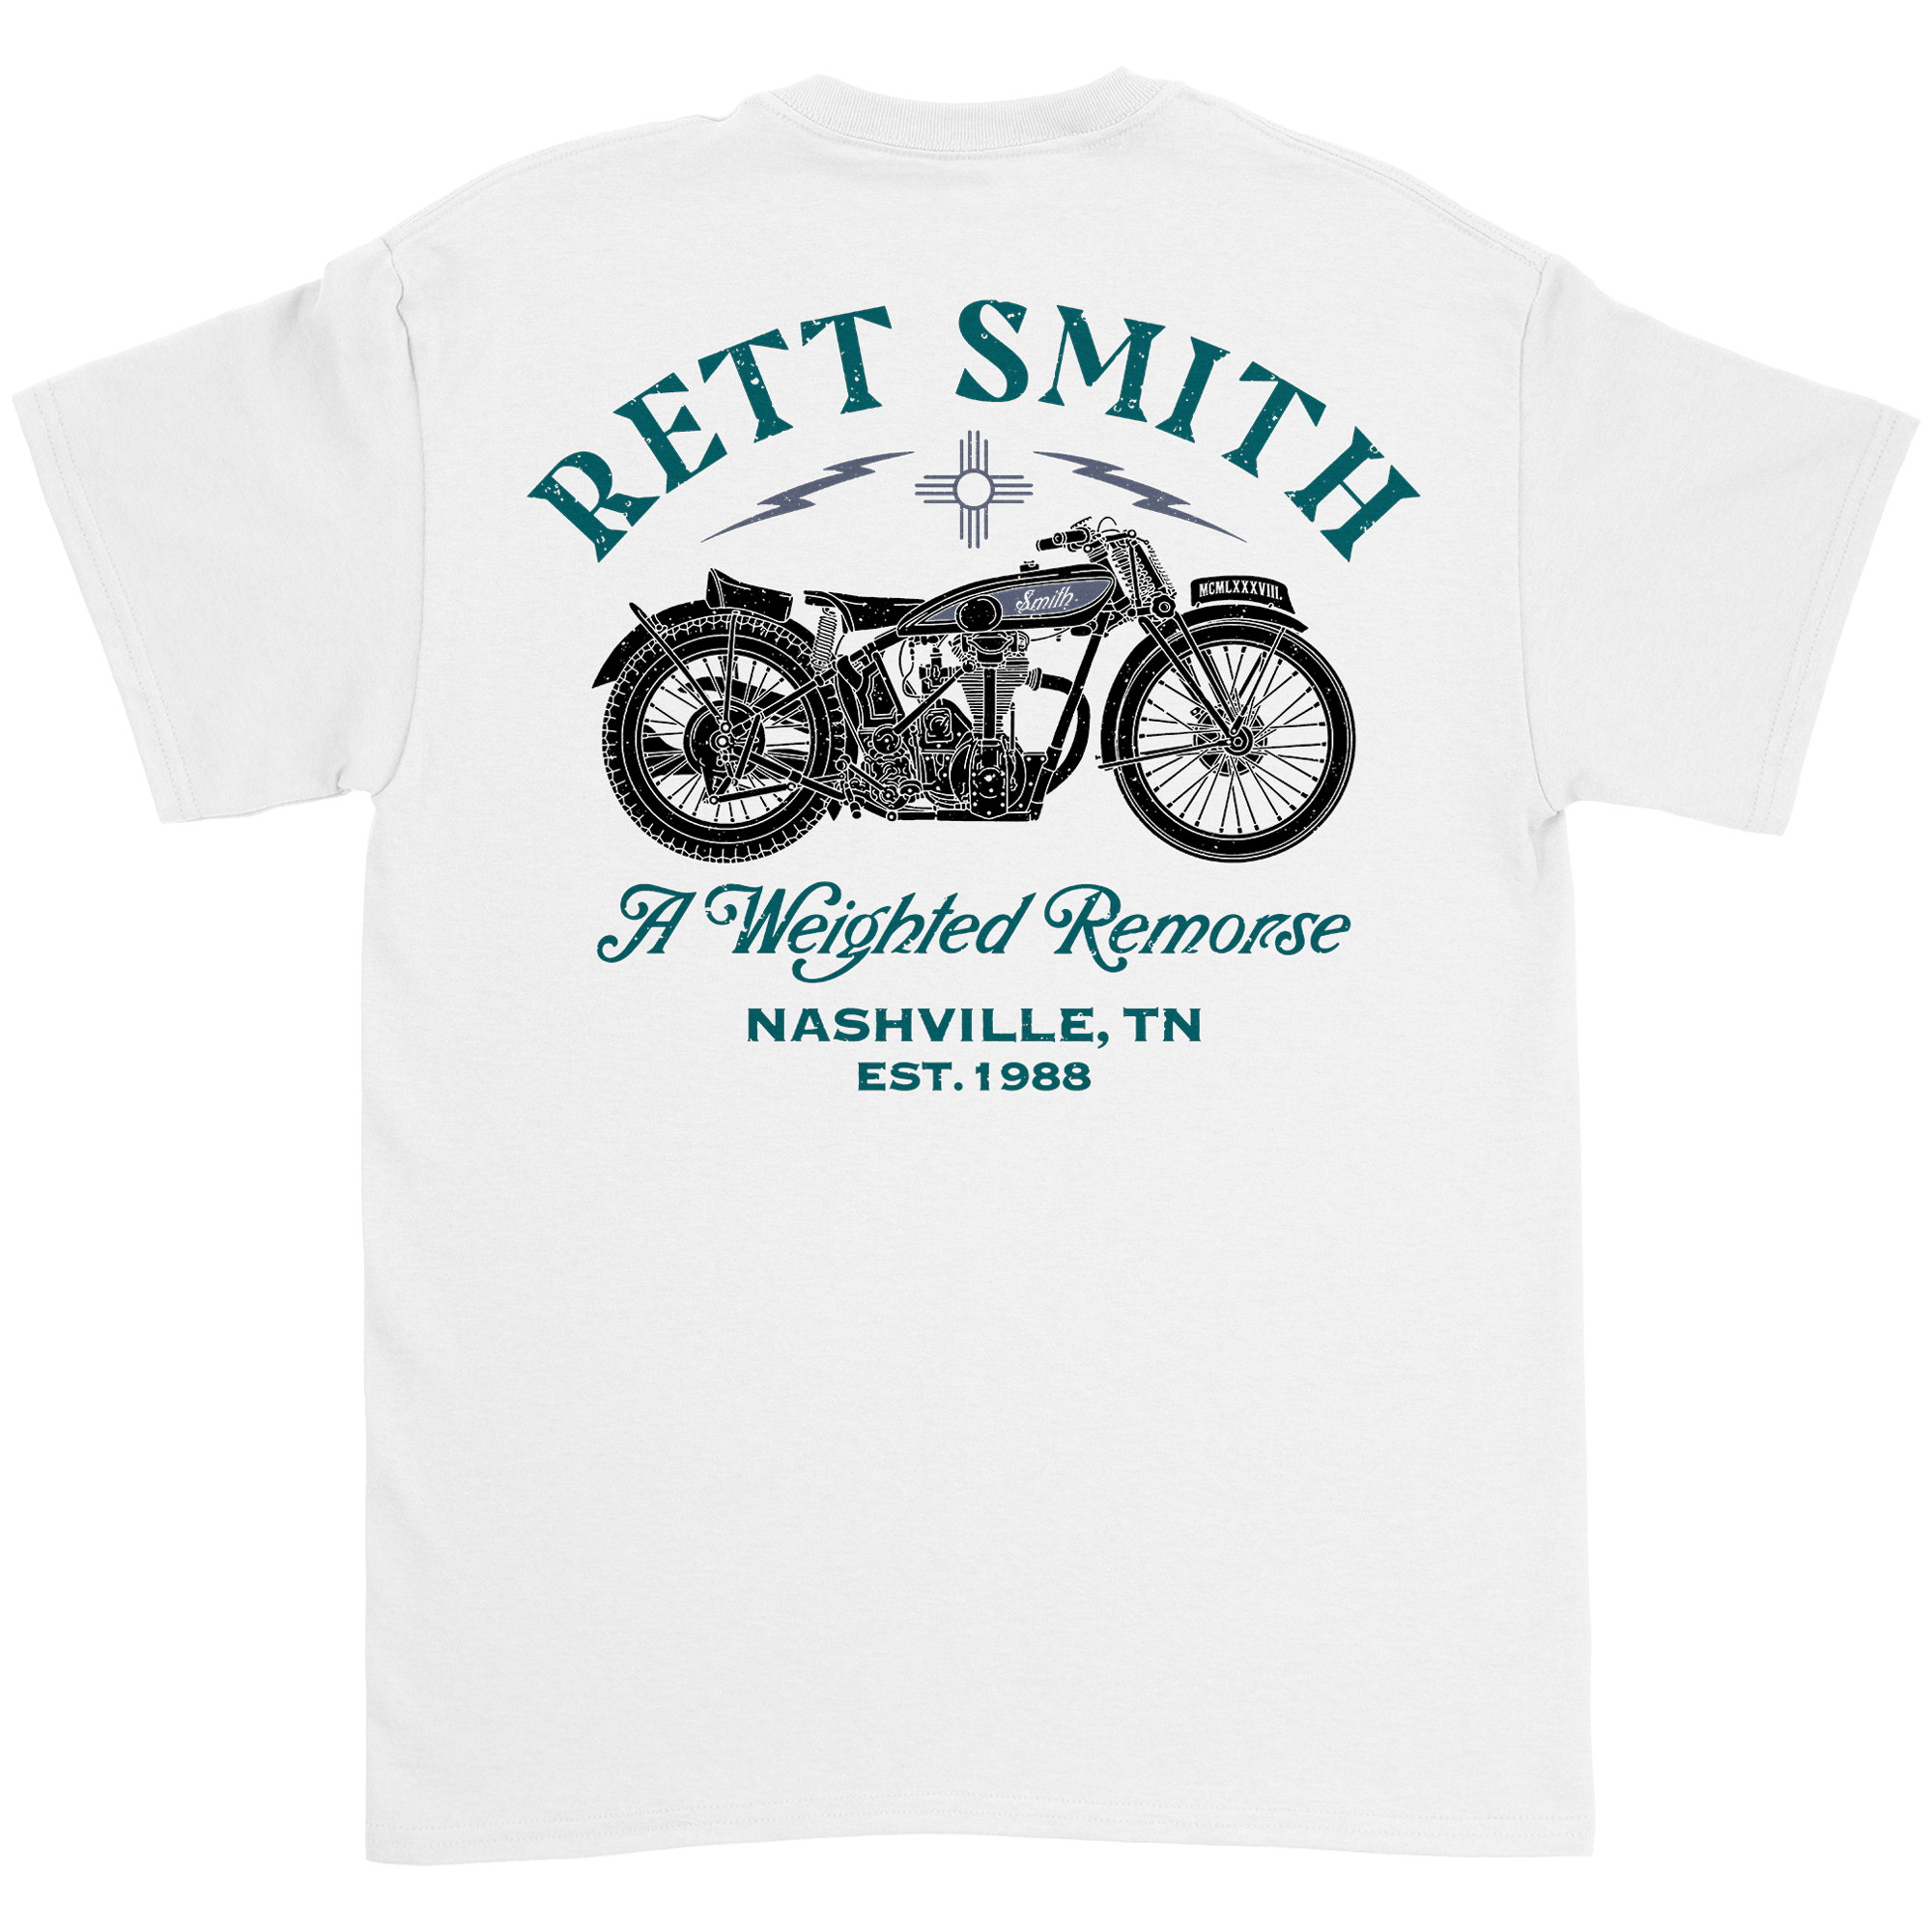 Rett Smith - Motorcycle Tee - White